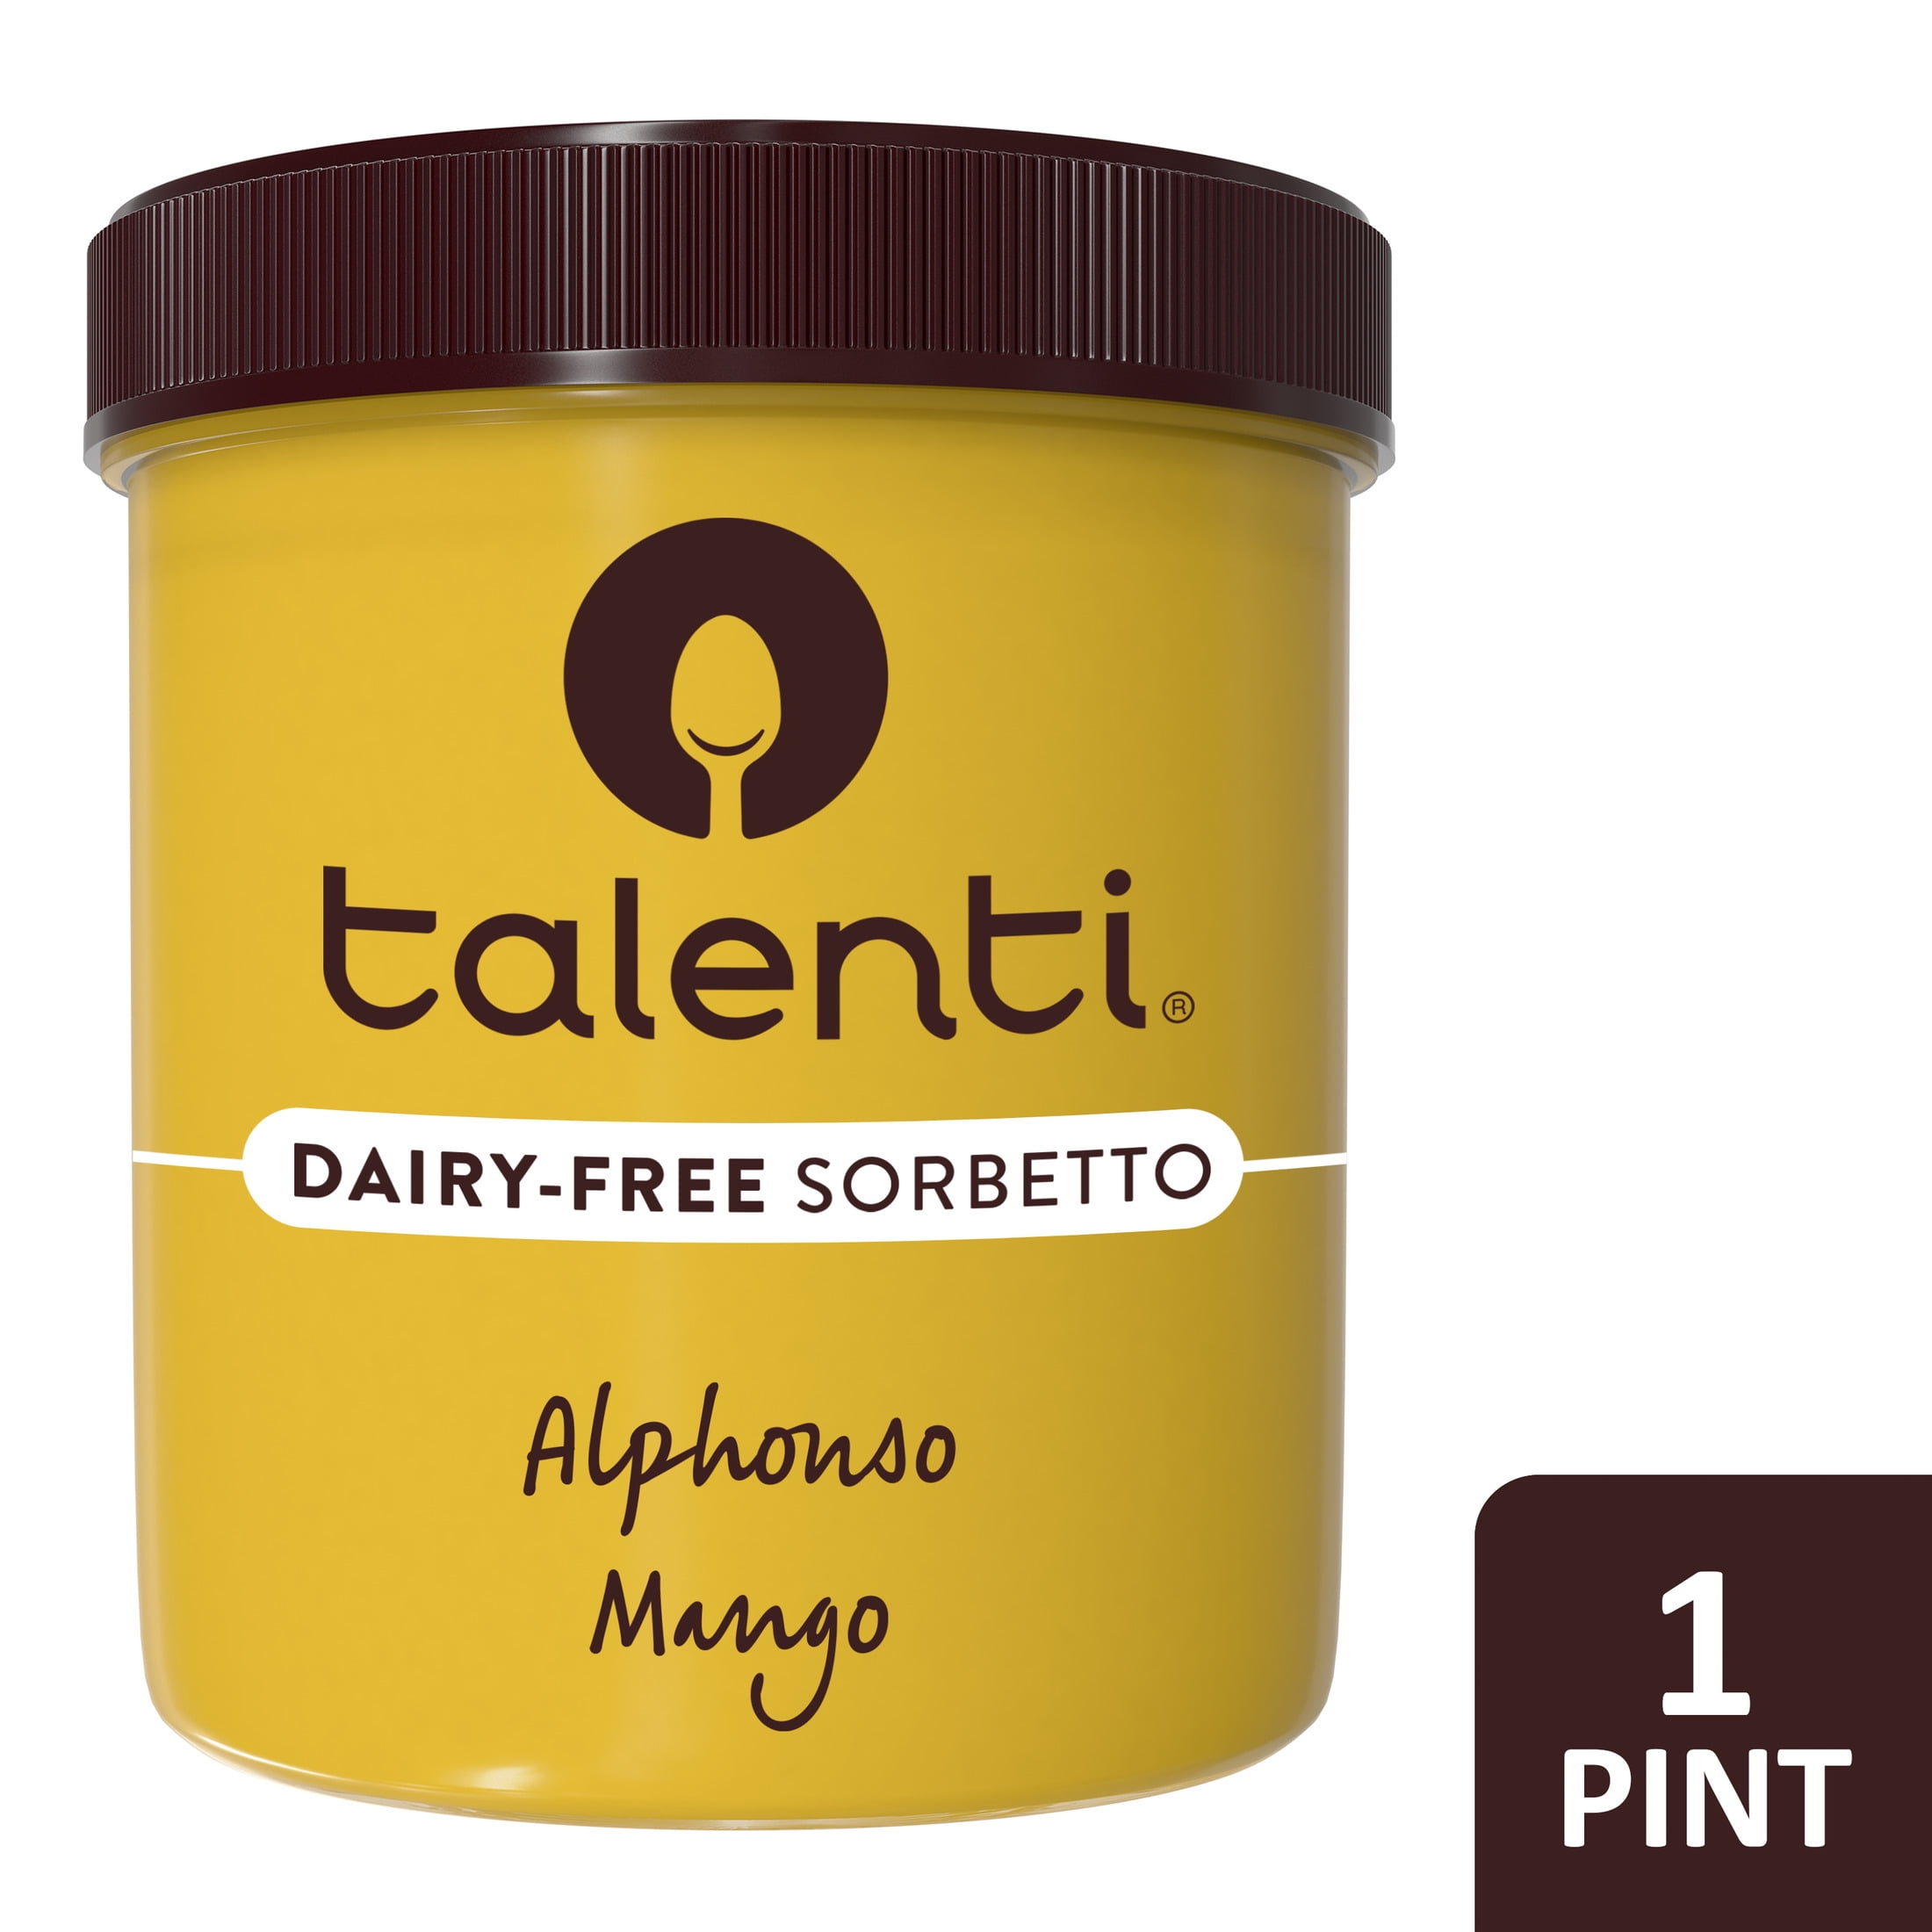 Talenti Sorbetto Dairy-Free Alphonso Mango 1 Pint